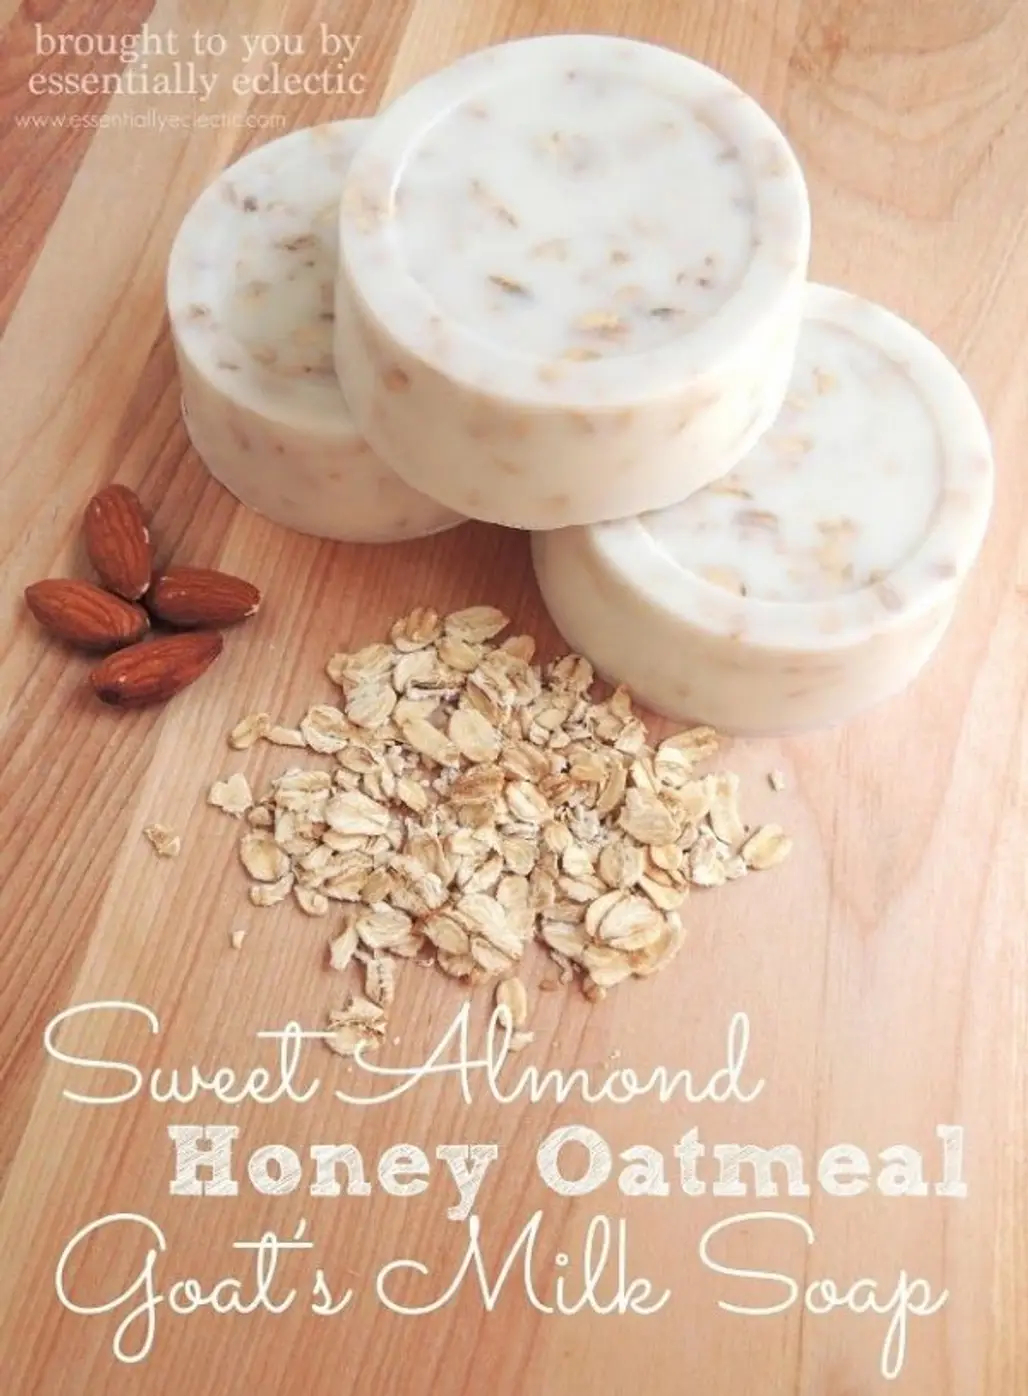 Sweet Almond, Honey, Oatmeal and Goat's Milk Soap